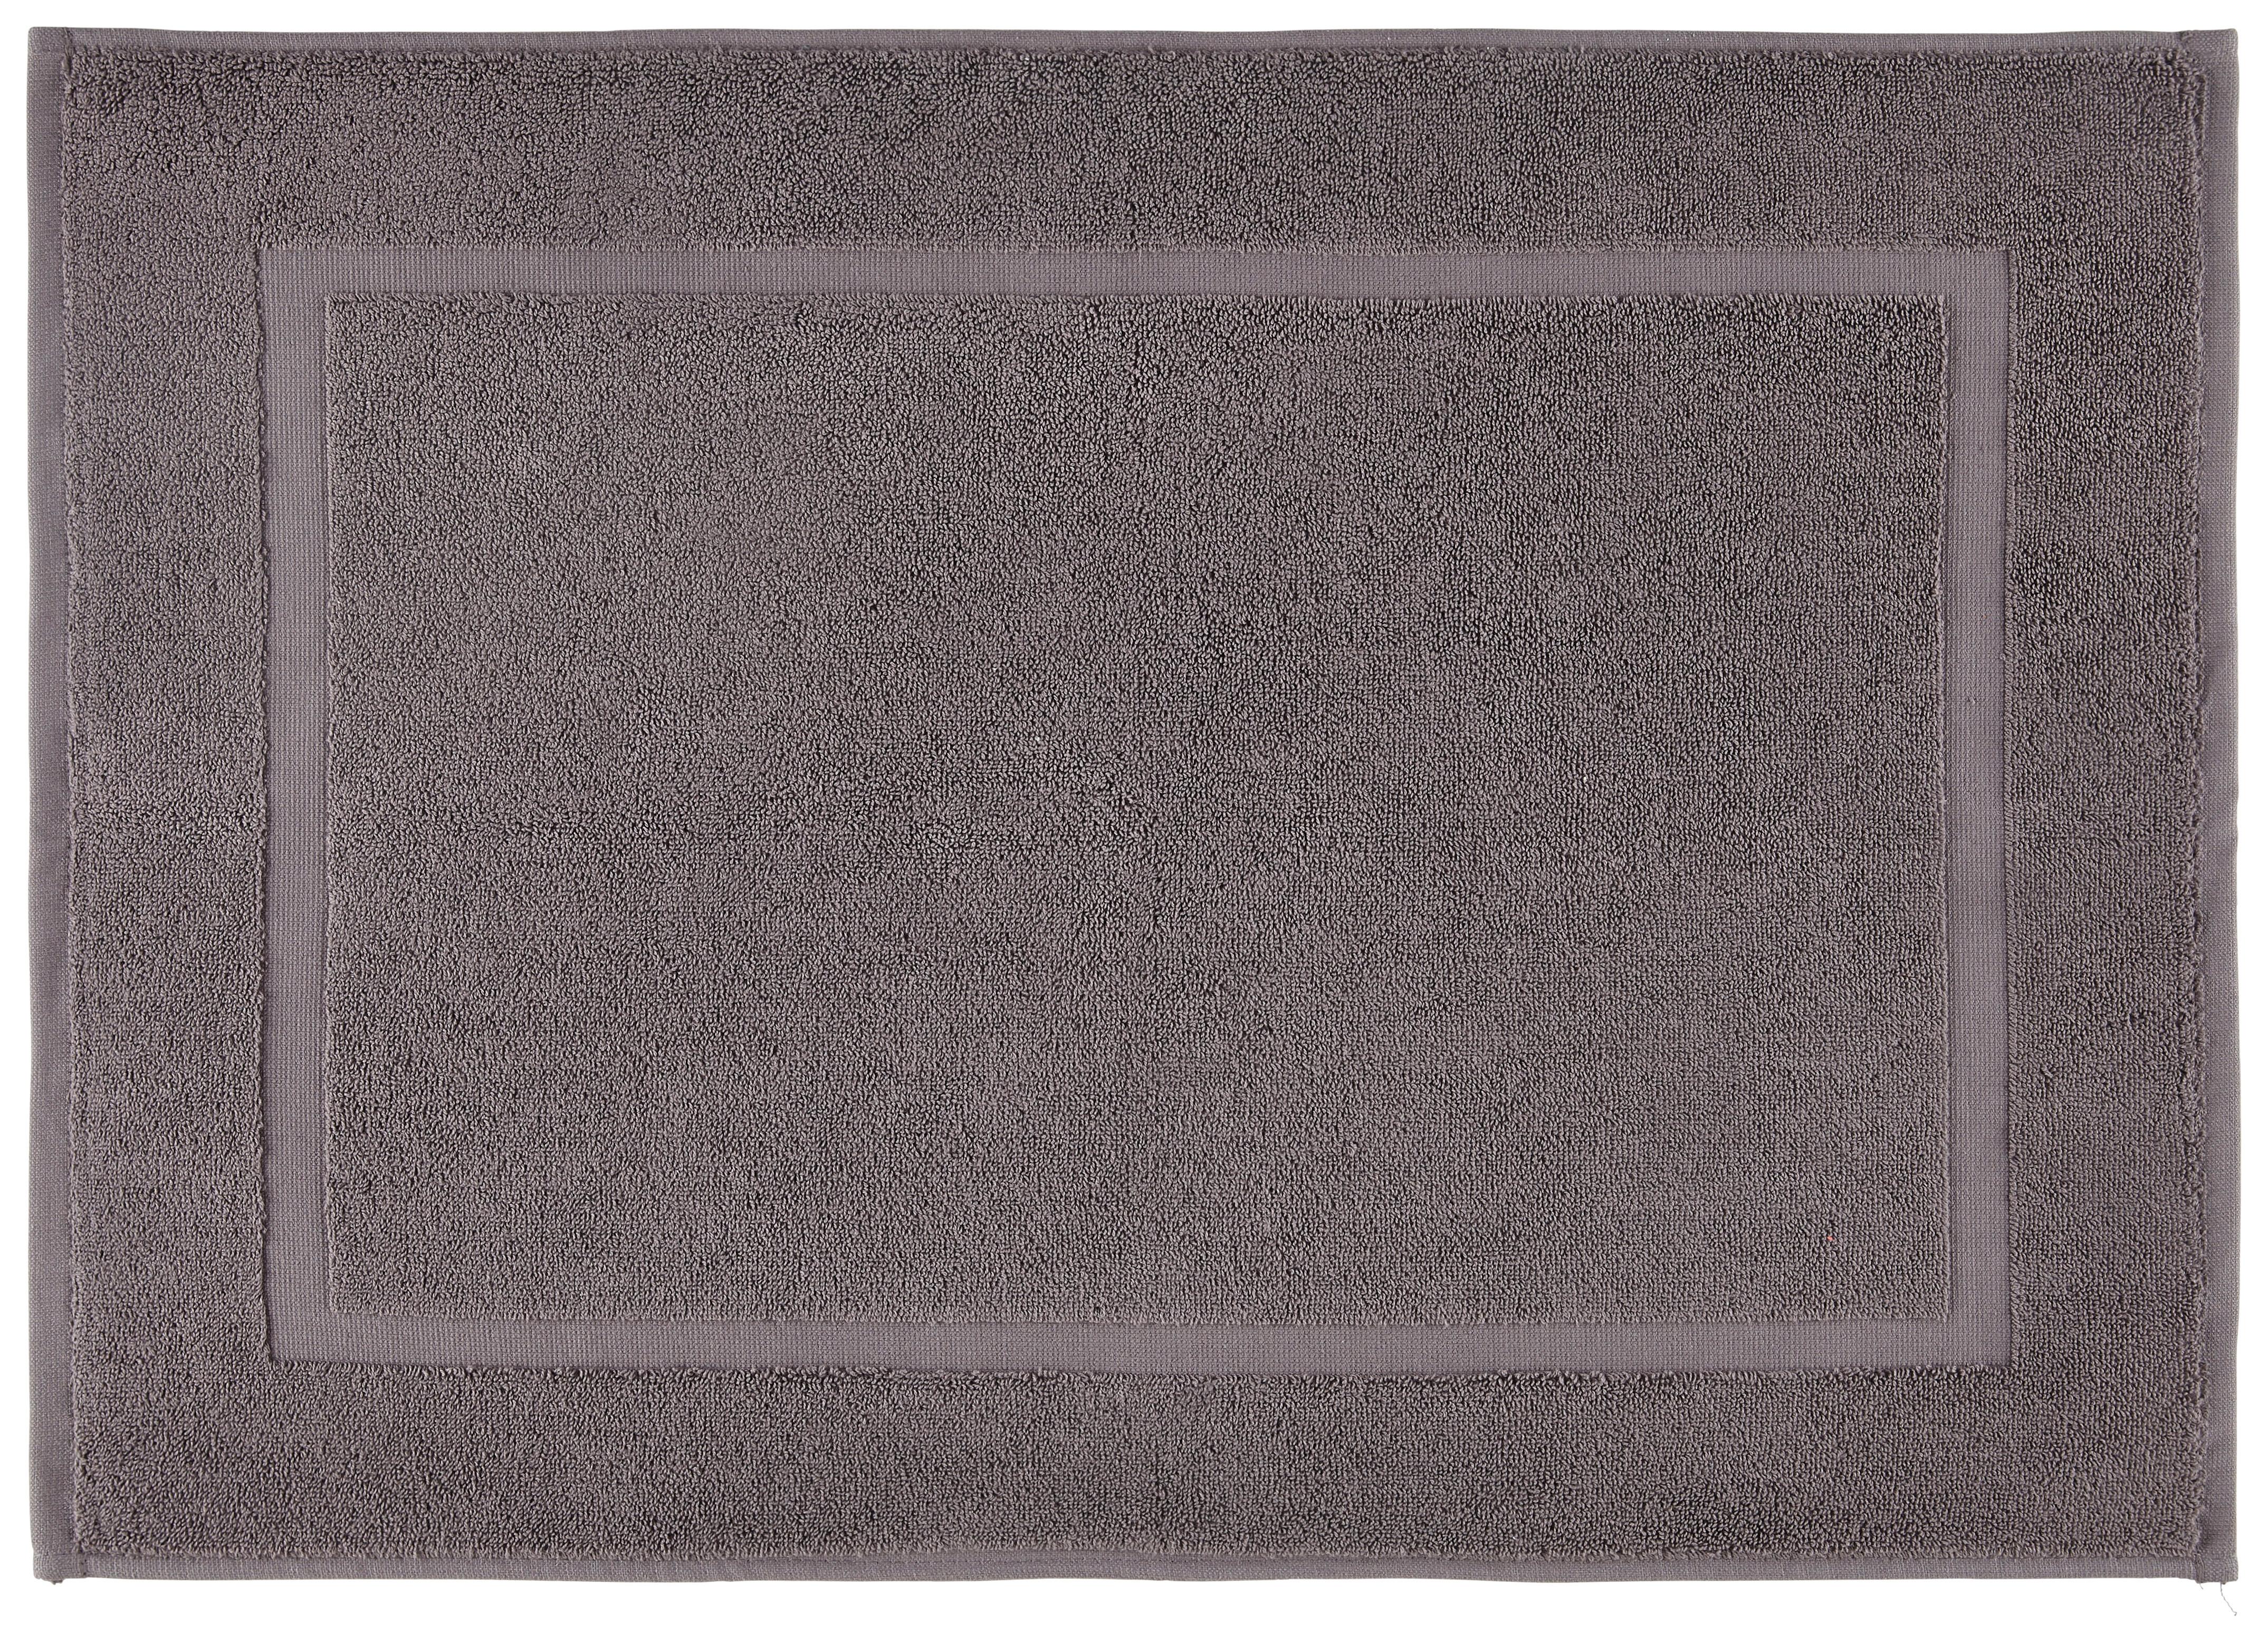 Badematte Melanie in Grau ca. 50x70cm - Anthrazit, Textil (50/70cm) - Modern Living